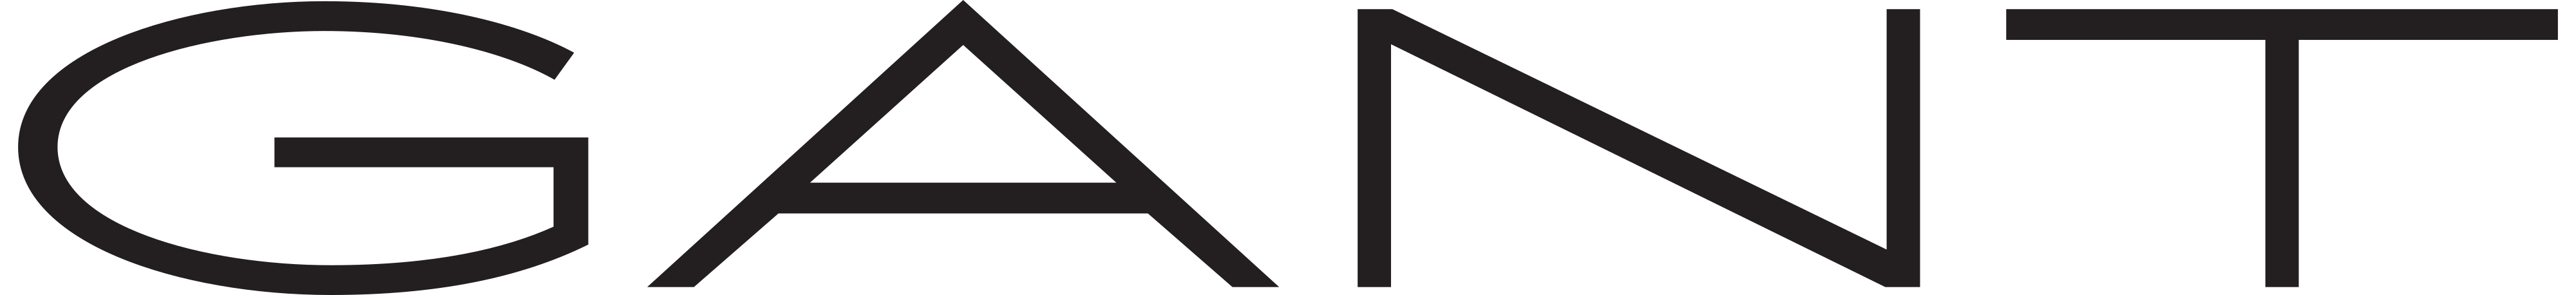 Gant logo - download.